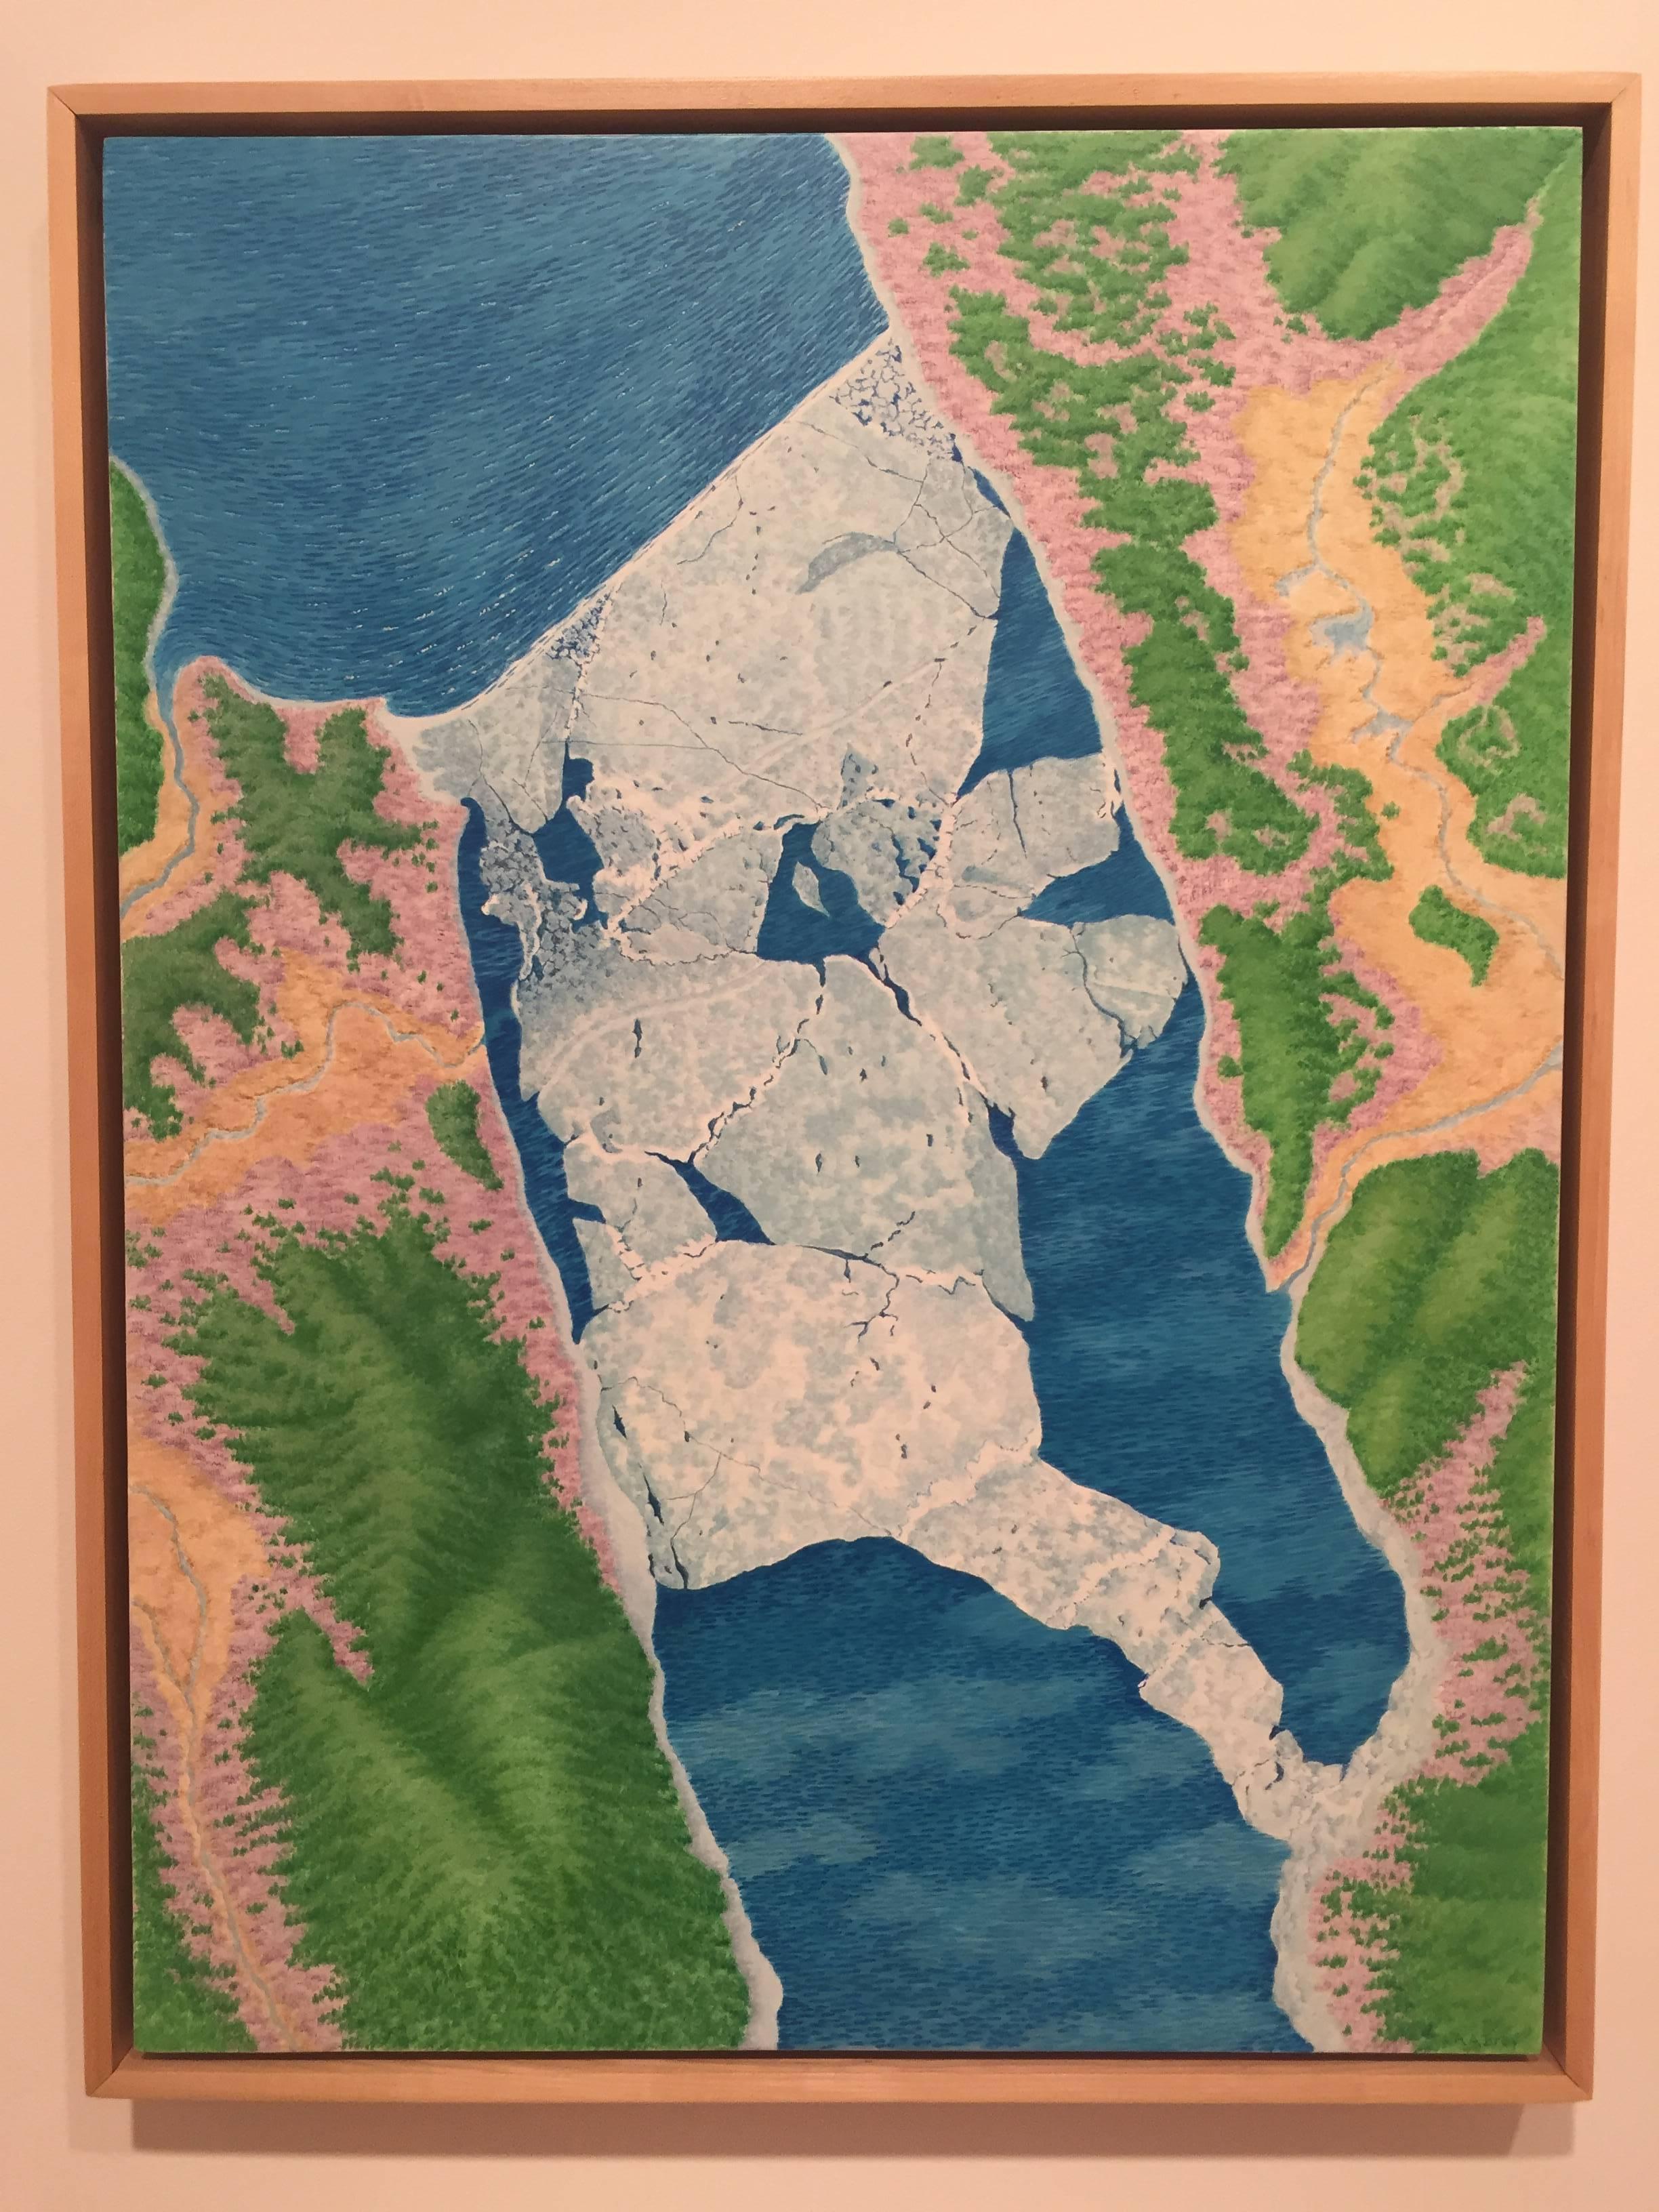 Alan Bray, Ice Dam, Casein on panel landscape painting, 2017 1